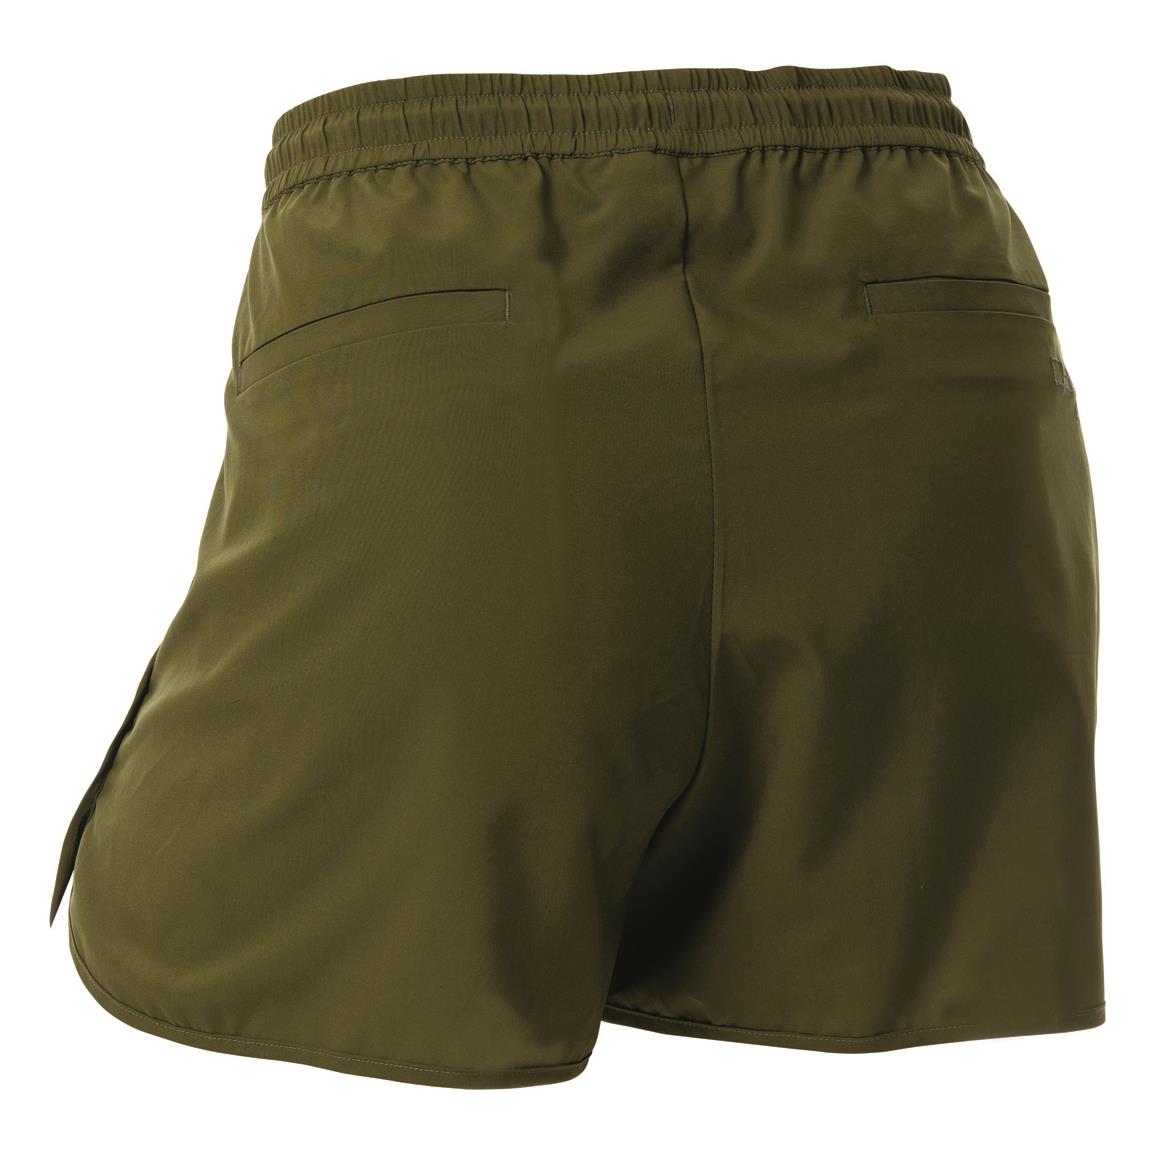 Outdoor Research Women's Ferrosi Shorts, 7